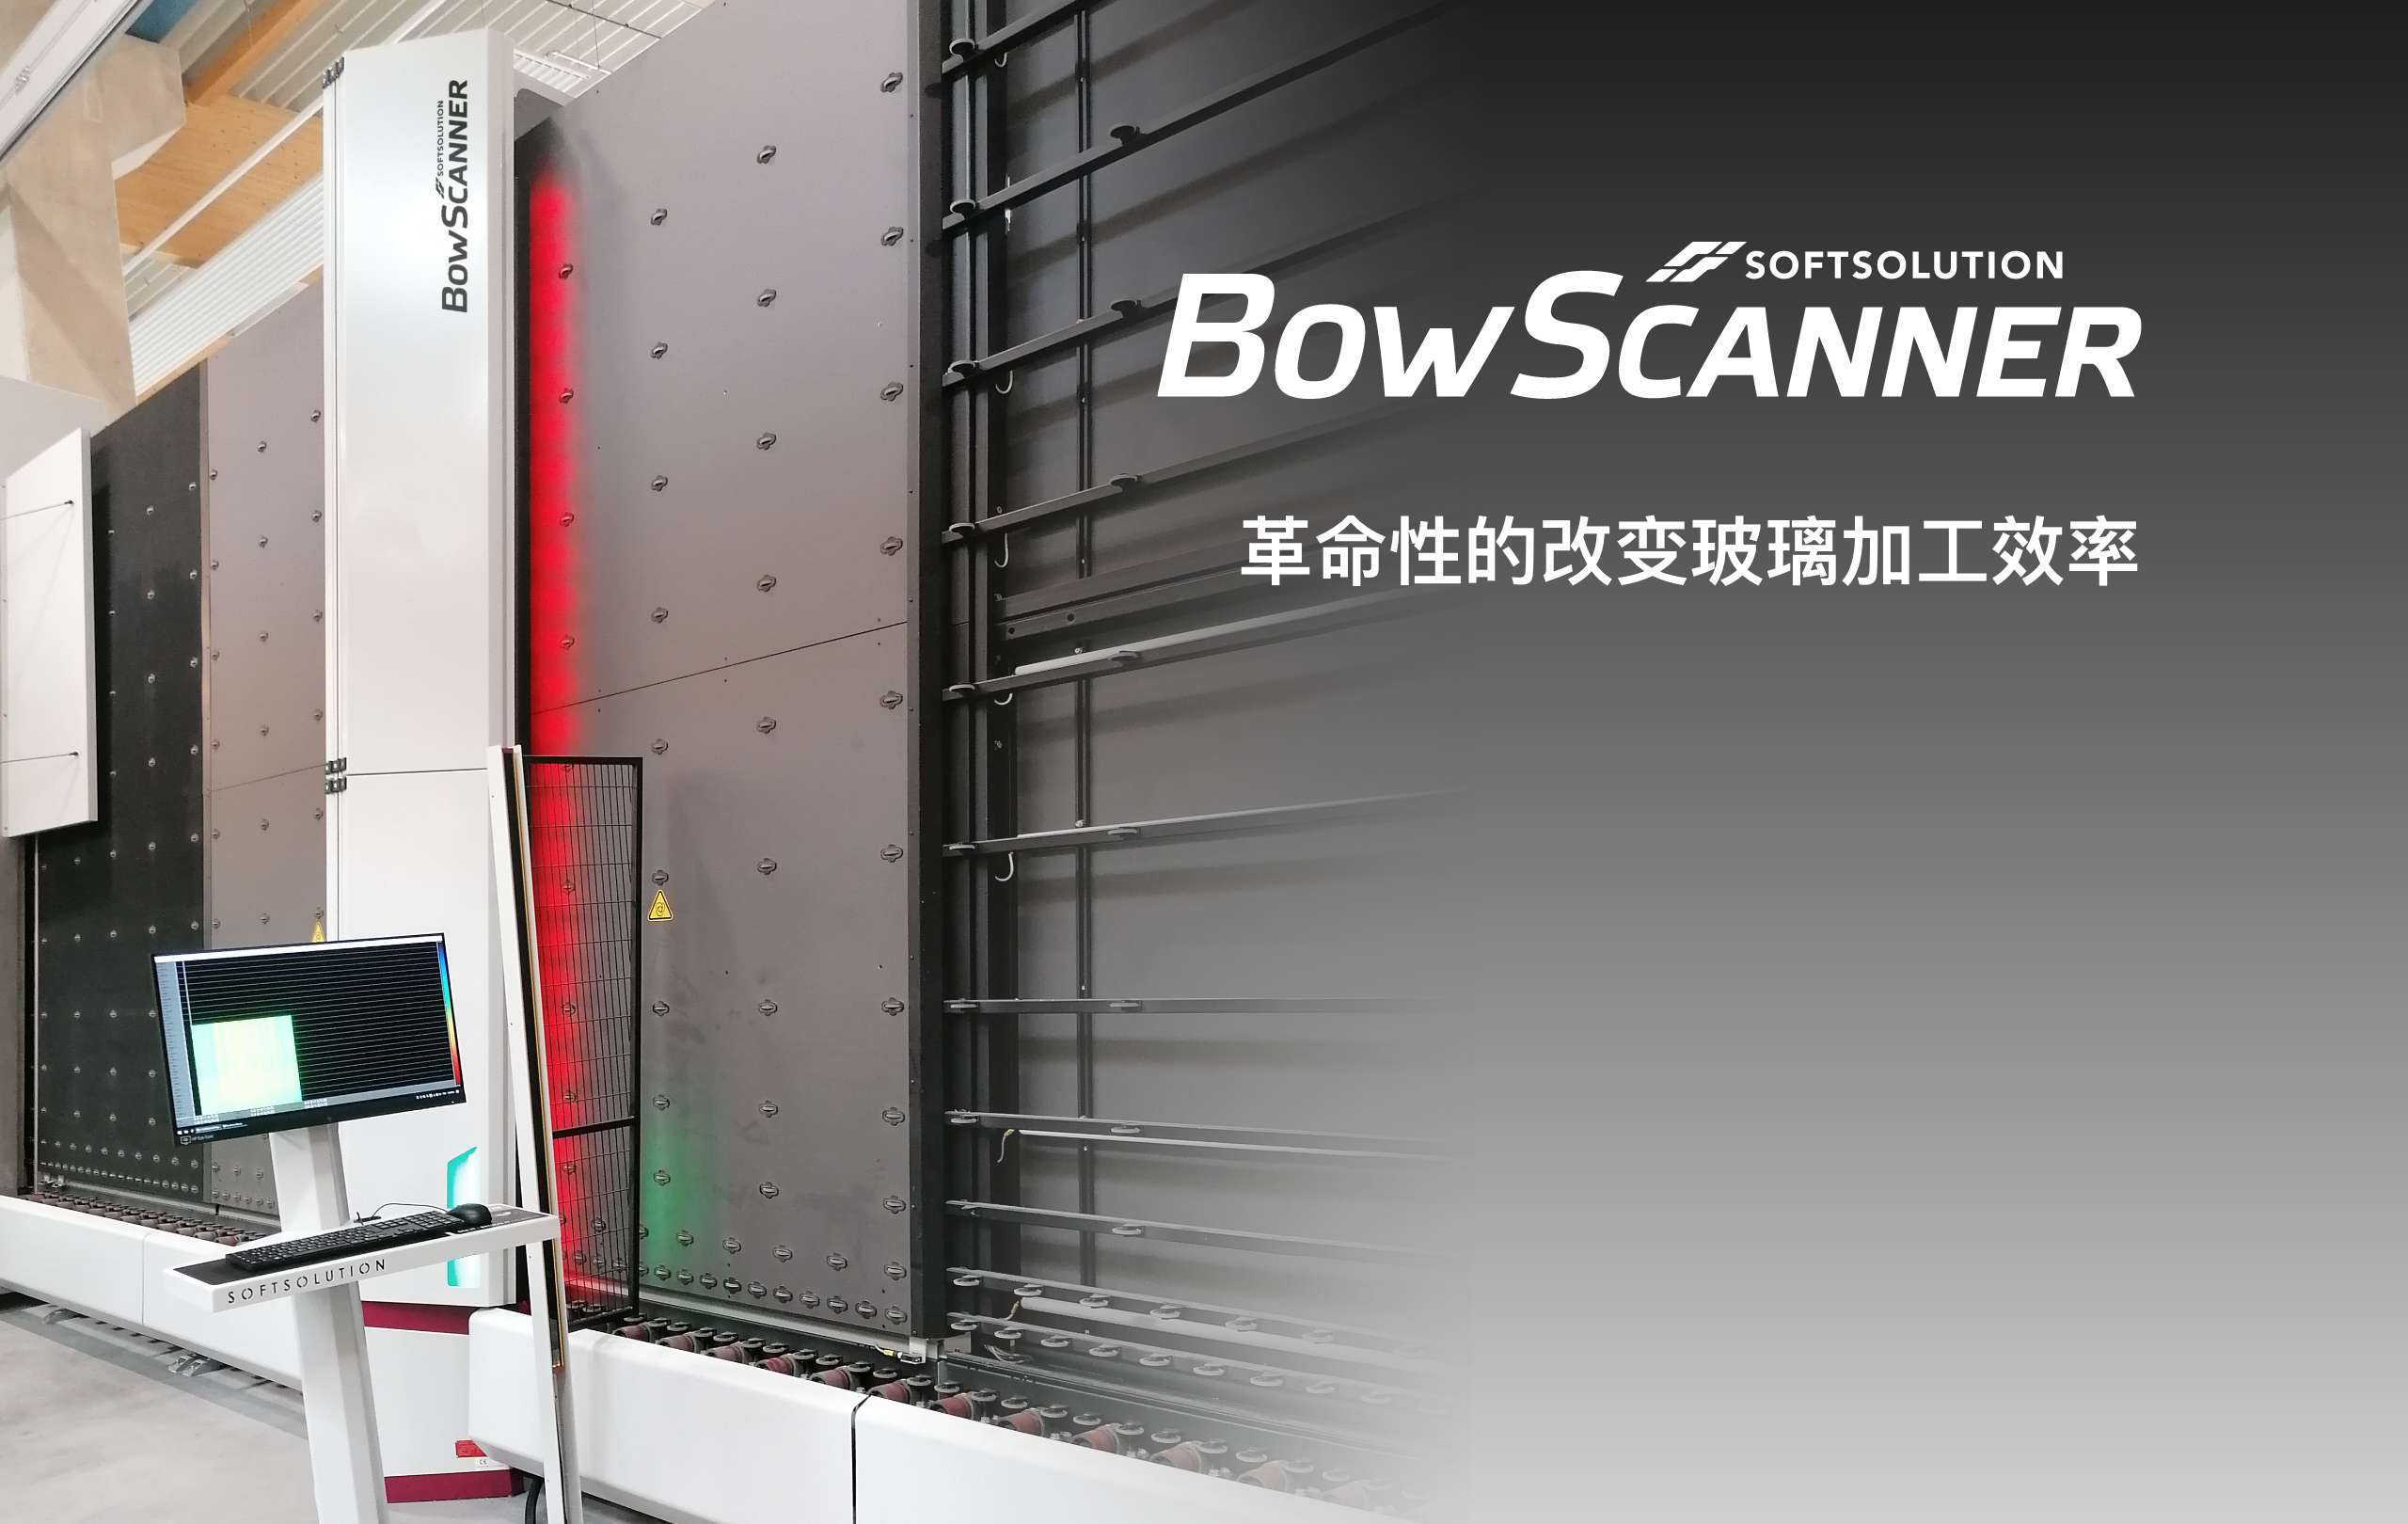 BowScanner - Revolutlionizing glass processing efficiency